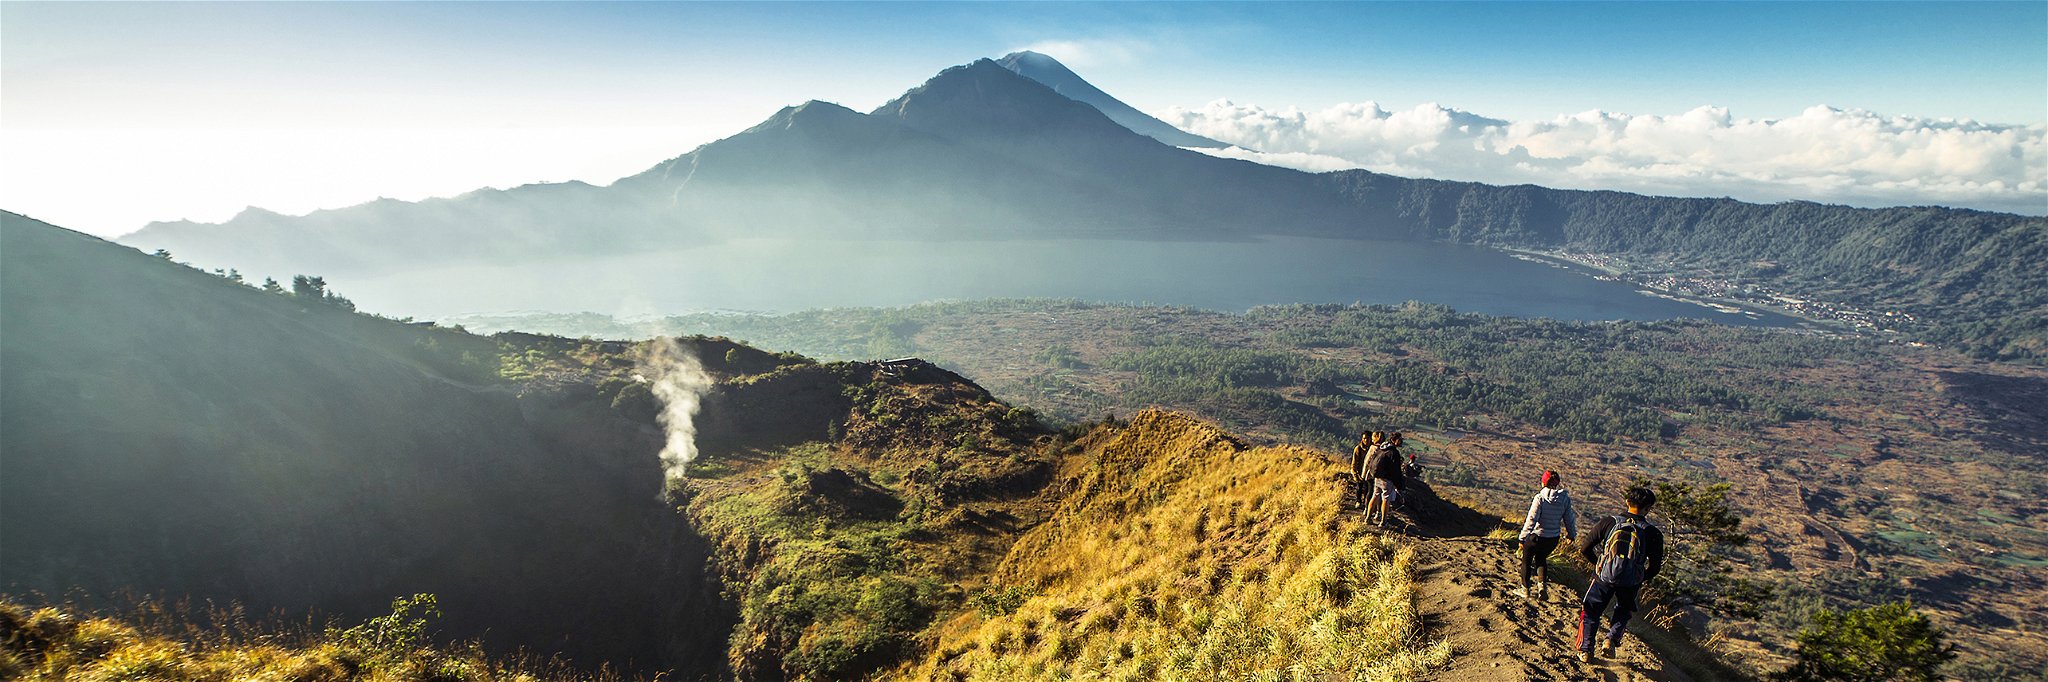 Volcano Batur Caldera, Bali, Indonesia